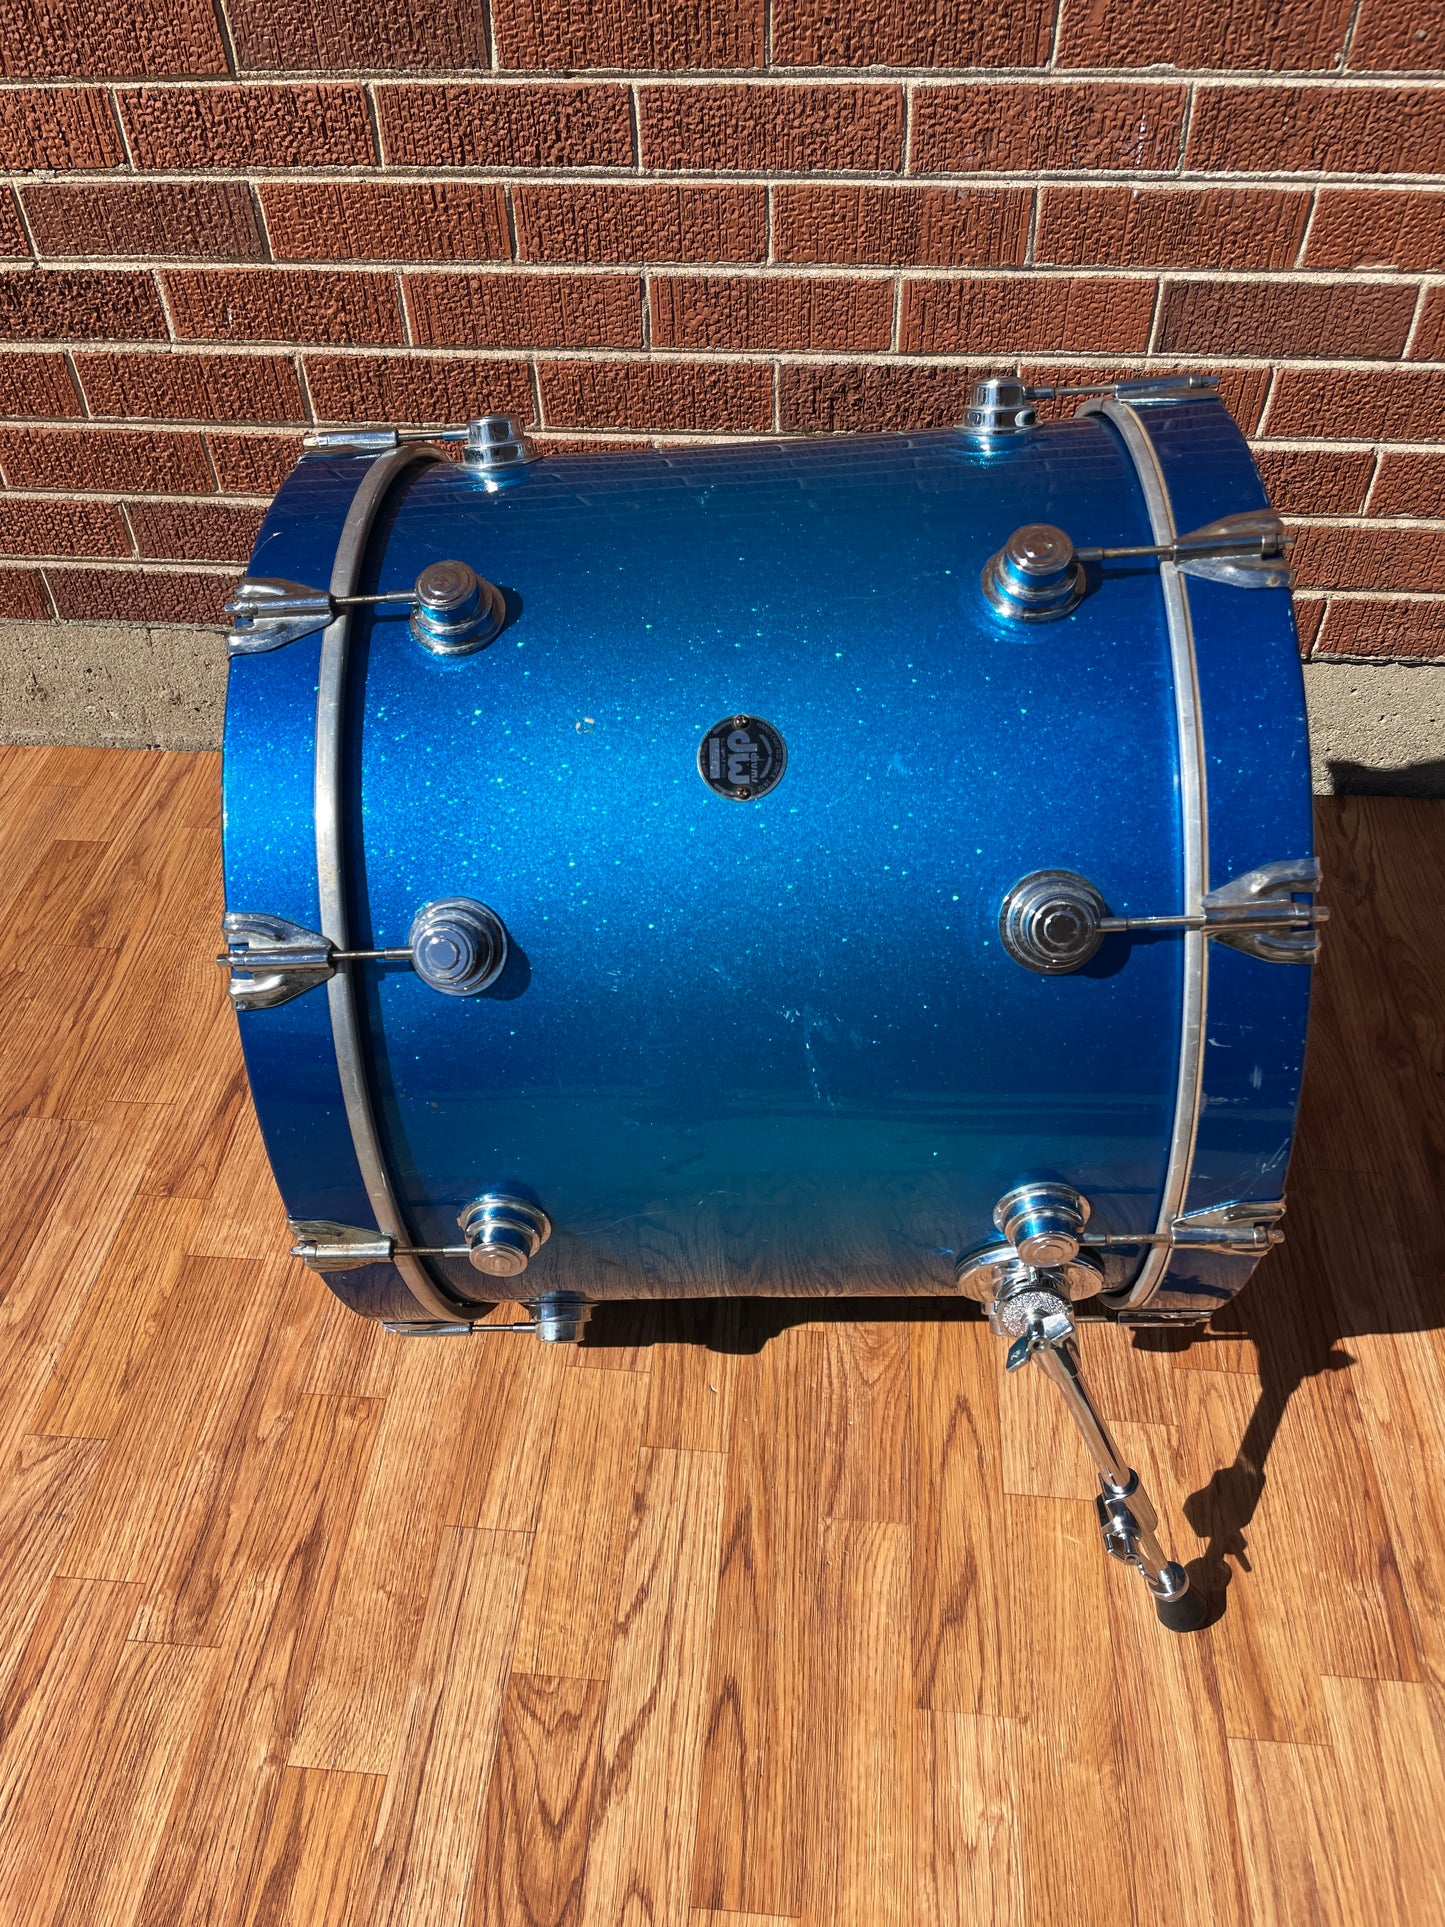 DW 18x22 Bass Drum Blue Sparkle Fade Drum Workshop